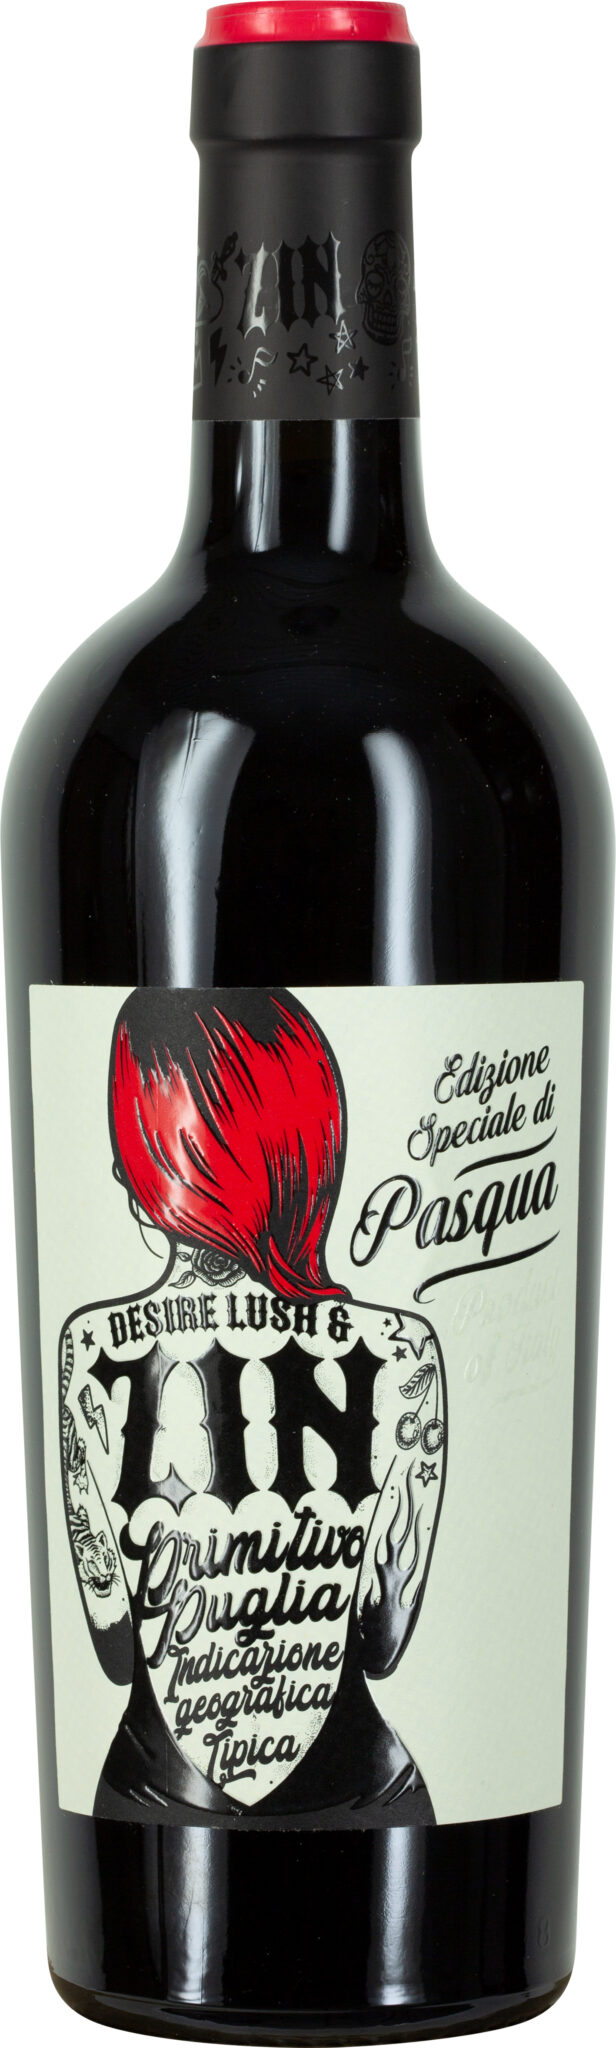 Pasqua Desire Lush & Primitivo der-schmeckt-mir — Zin, Puglia IGT